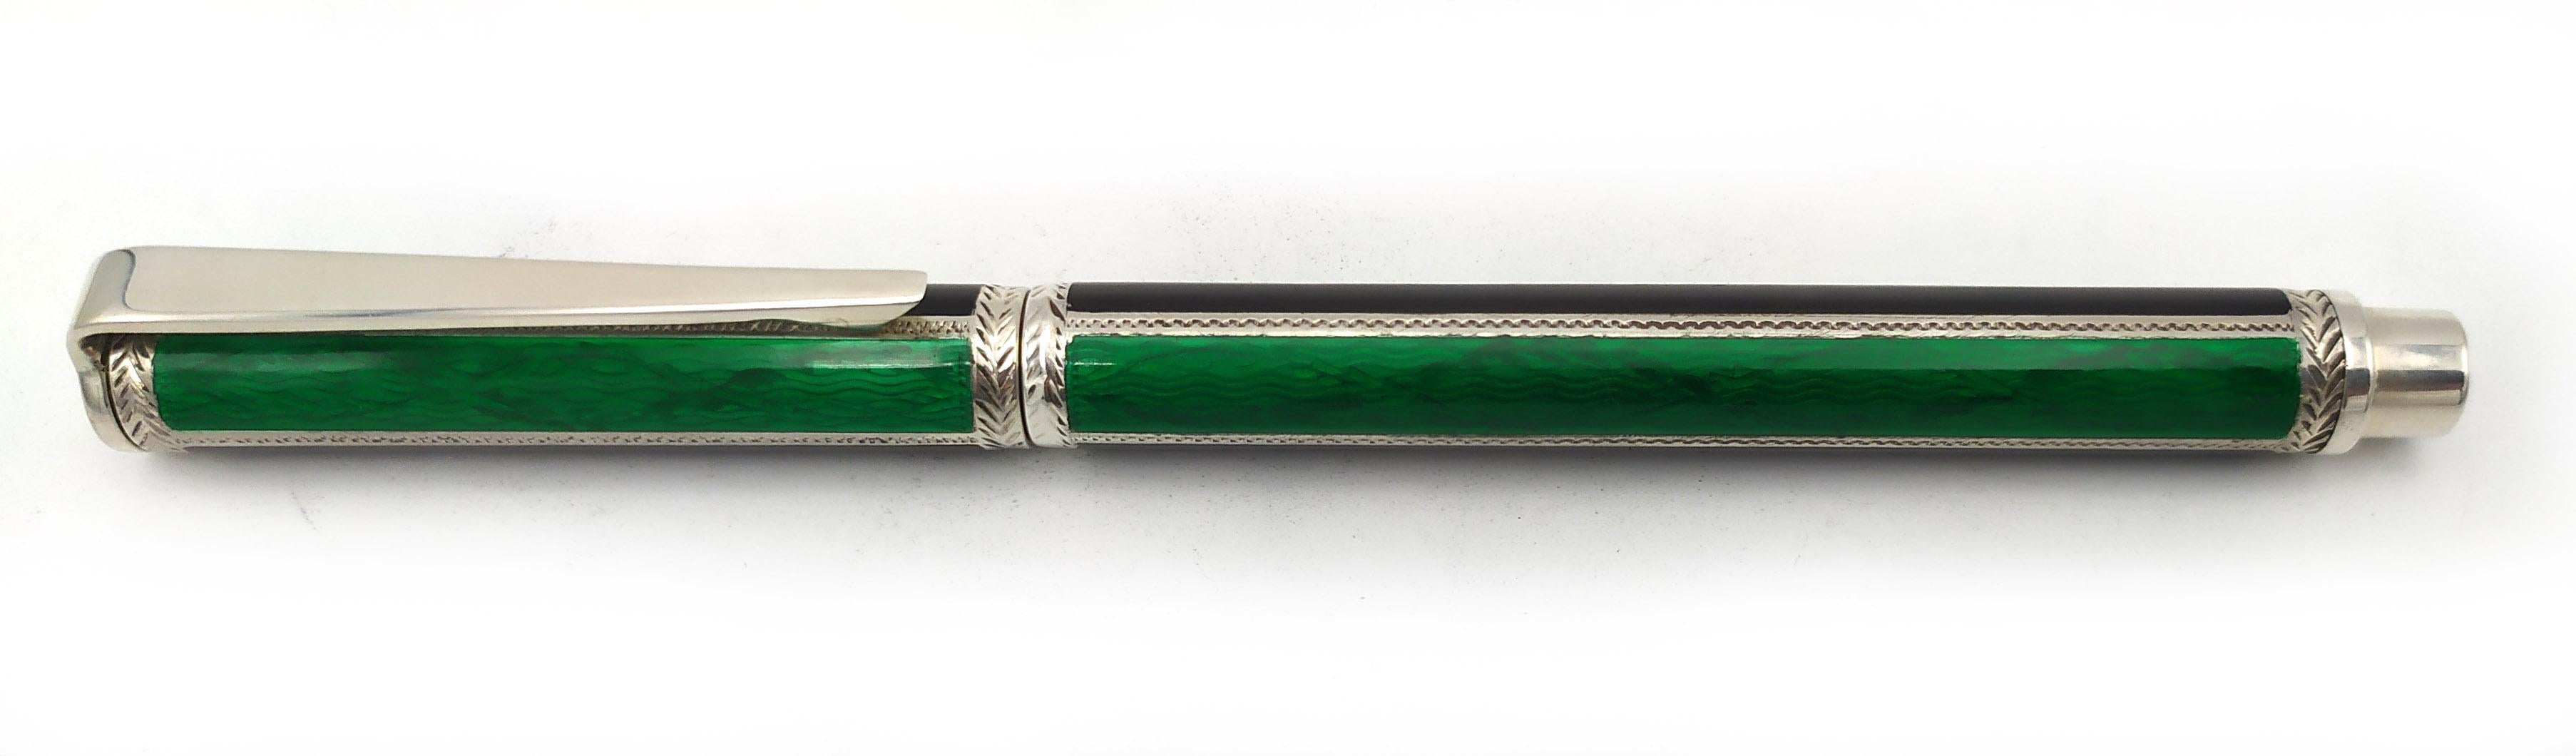 Fountain pen, Ballpoint pen and tray for a Desk Set green enamel Salimbeni  For Sale 4